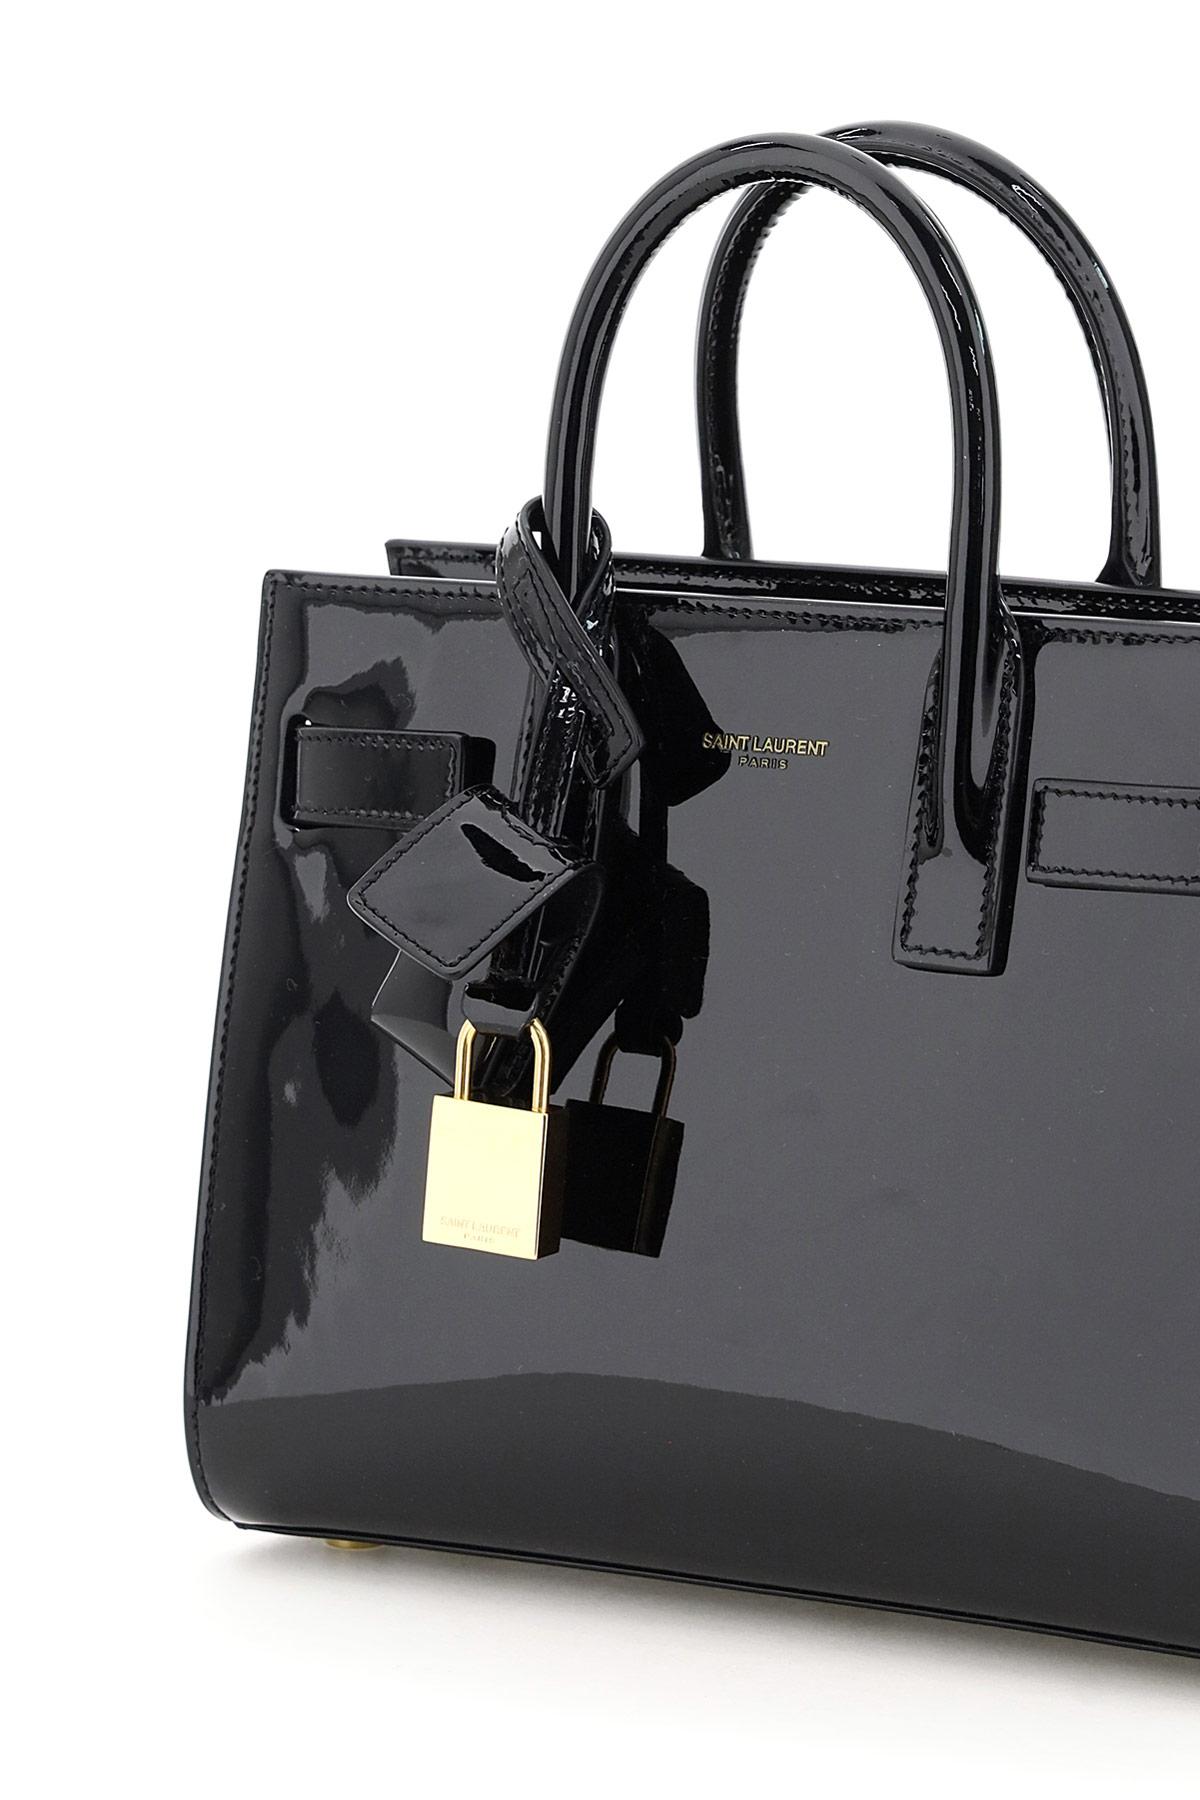 Saint Laurent Sac De Jour Nano Leather Top-handle Bag in Black